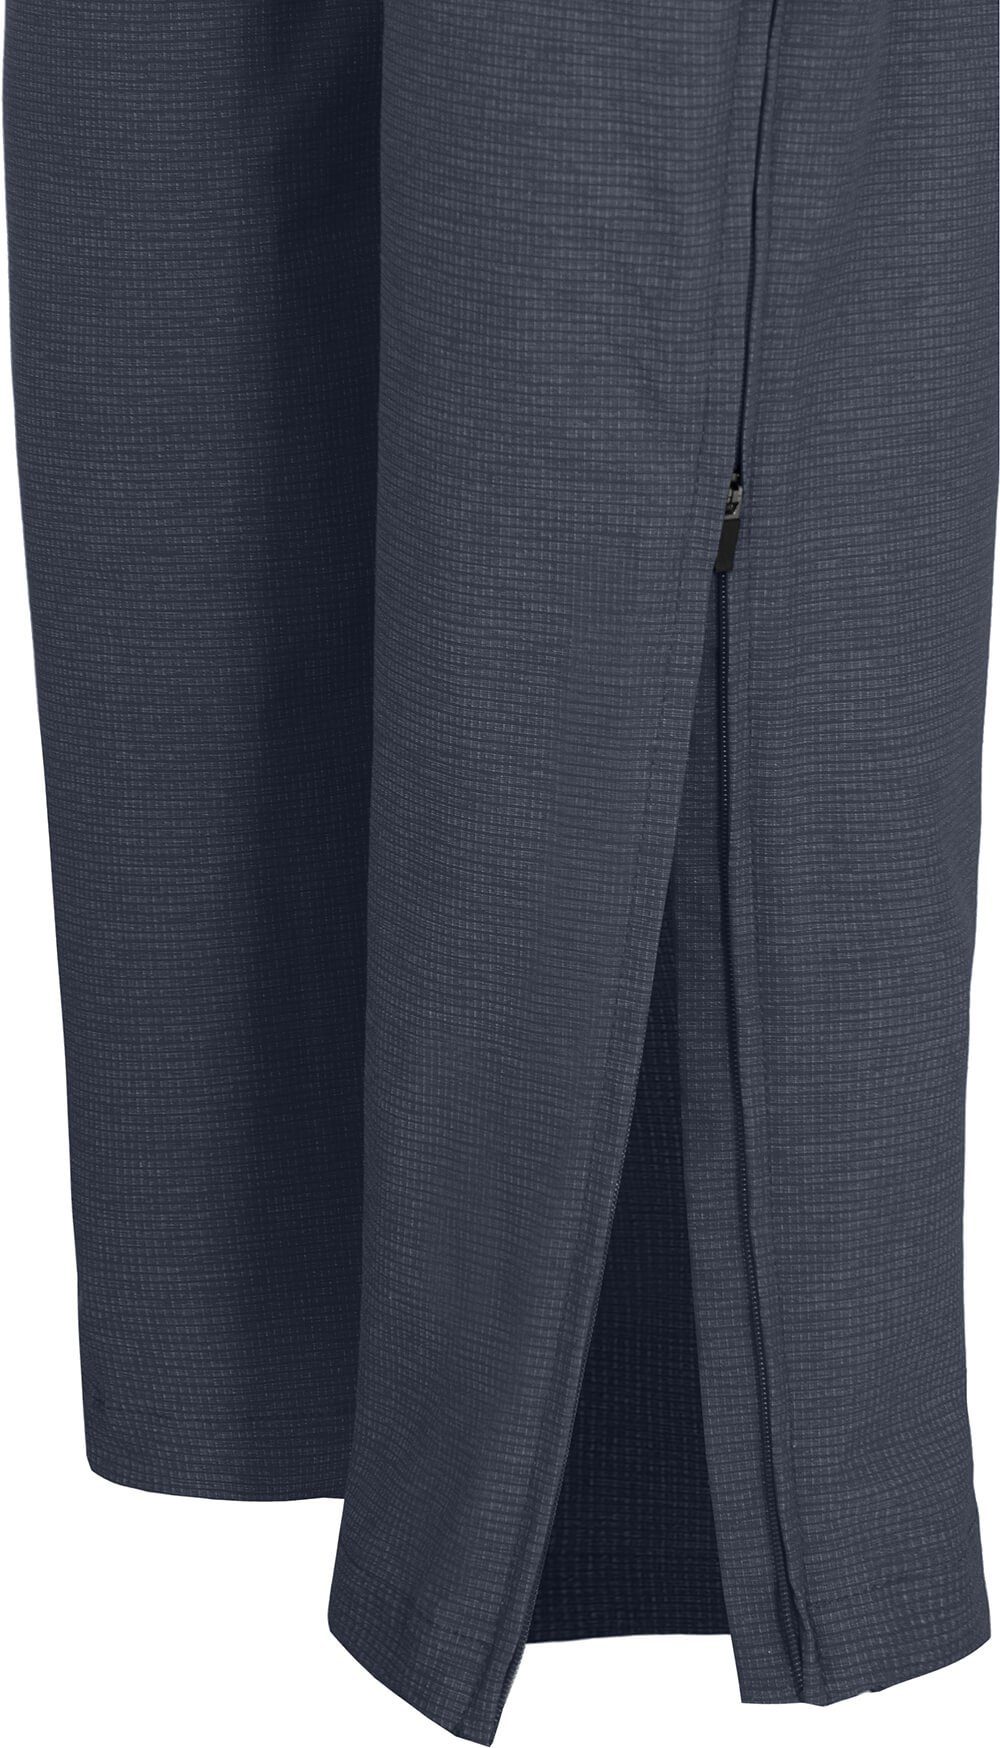 Bergson Zip-off-Hose PORI grau/blau mit elastisch, Doppel T-ZIPP Normalgrößen, robust Zipp-Off Wanderhose, Damen